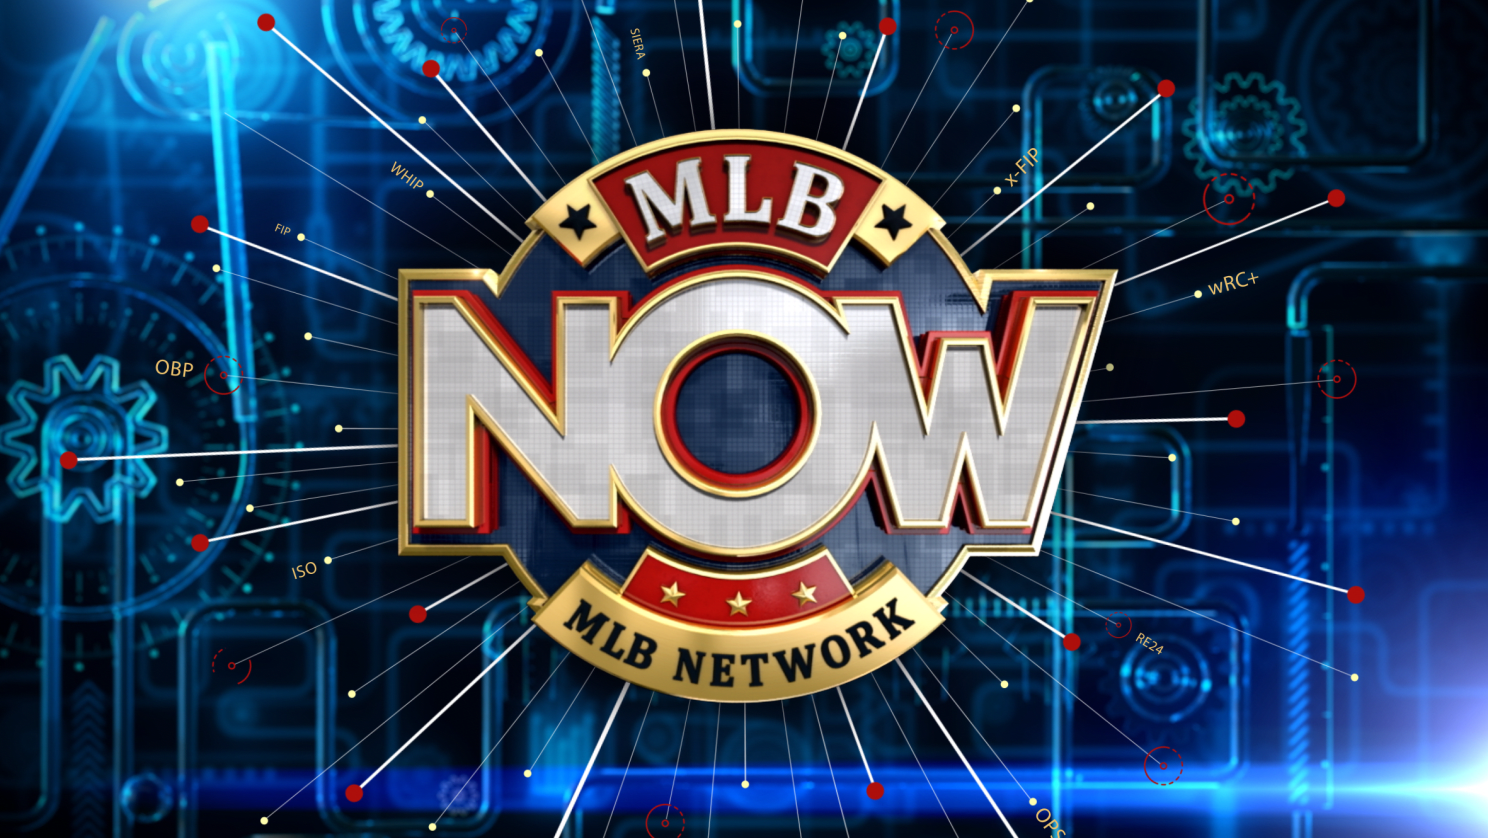 MLB Now on MLB Network